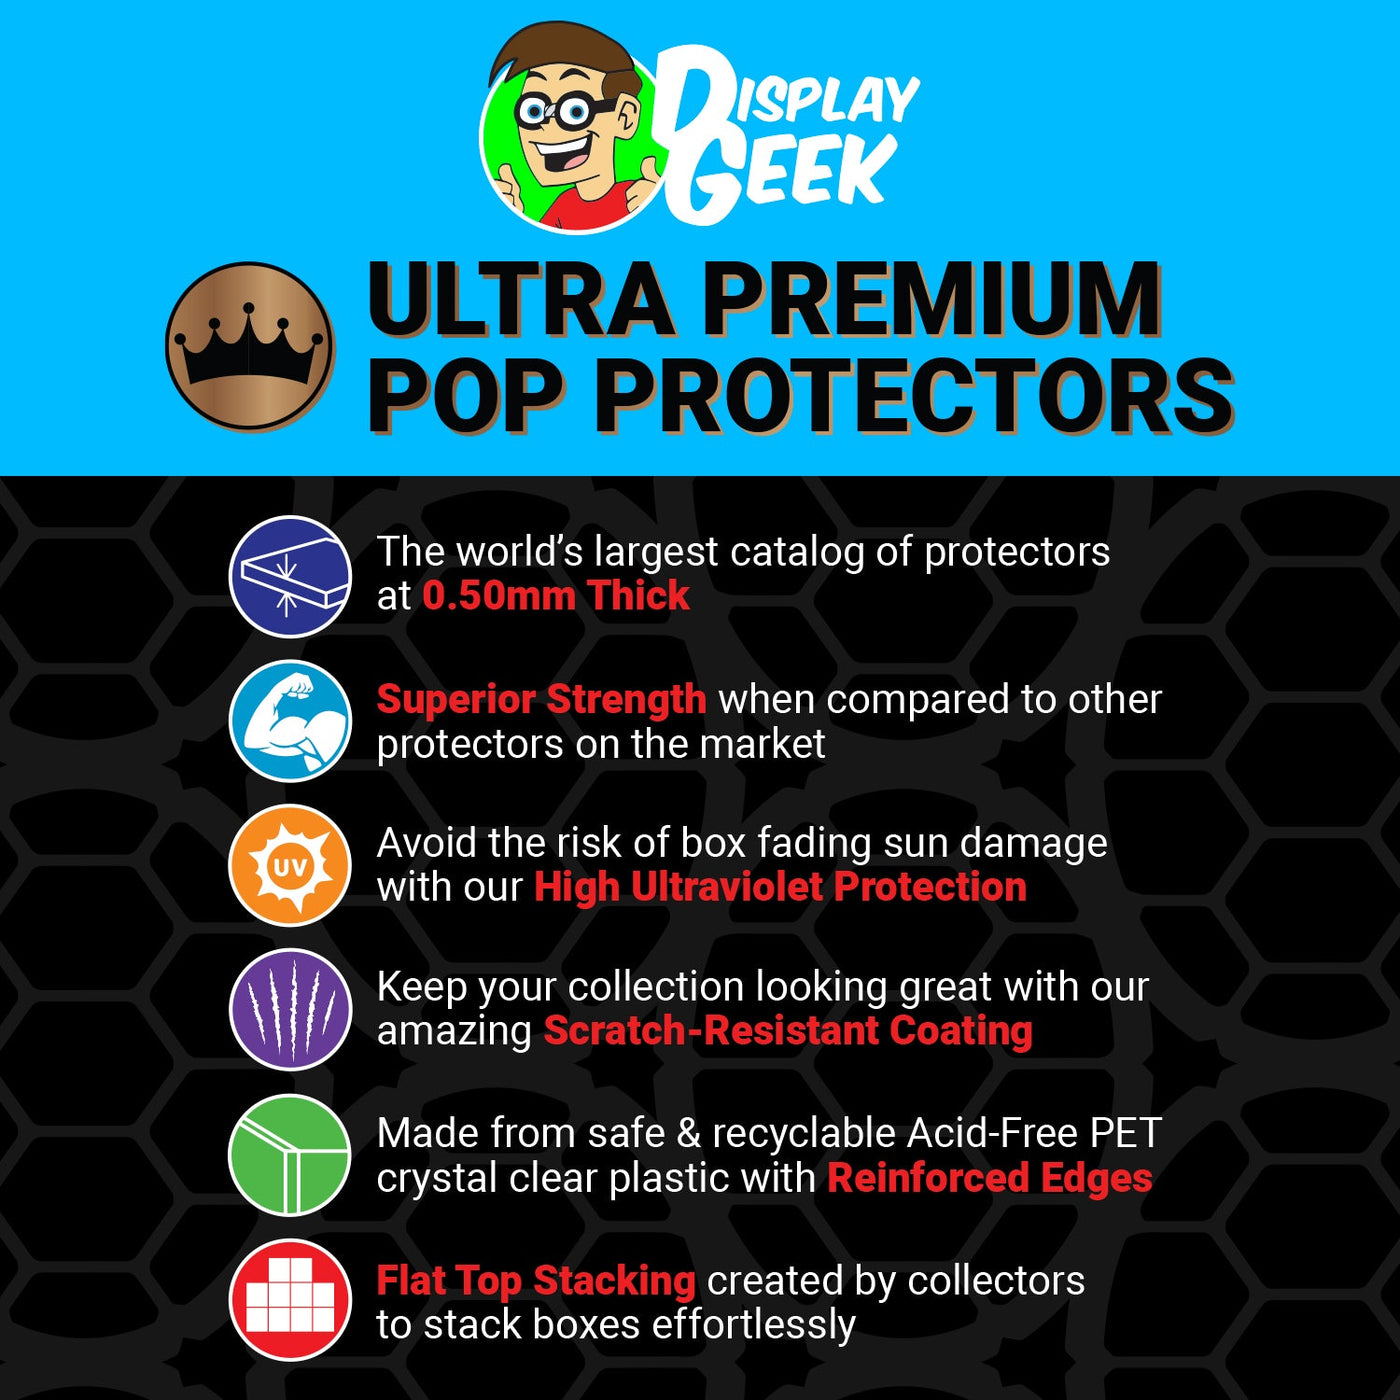 80 Pack of Funko Soda Pop Protectors 12 oz. on The Protector Guide App by Display Geek